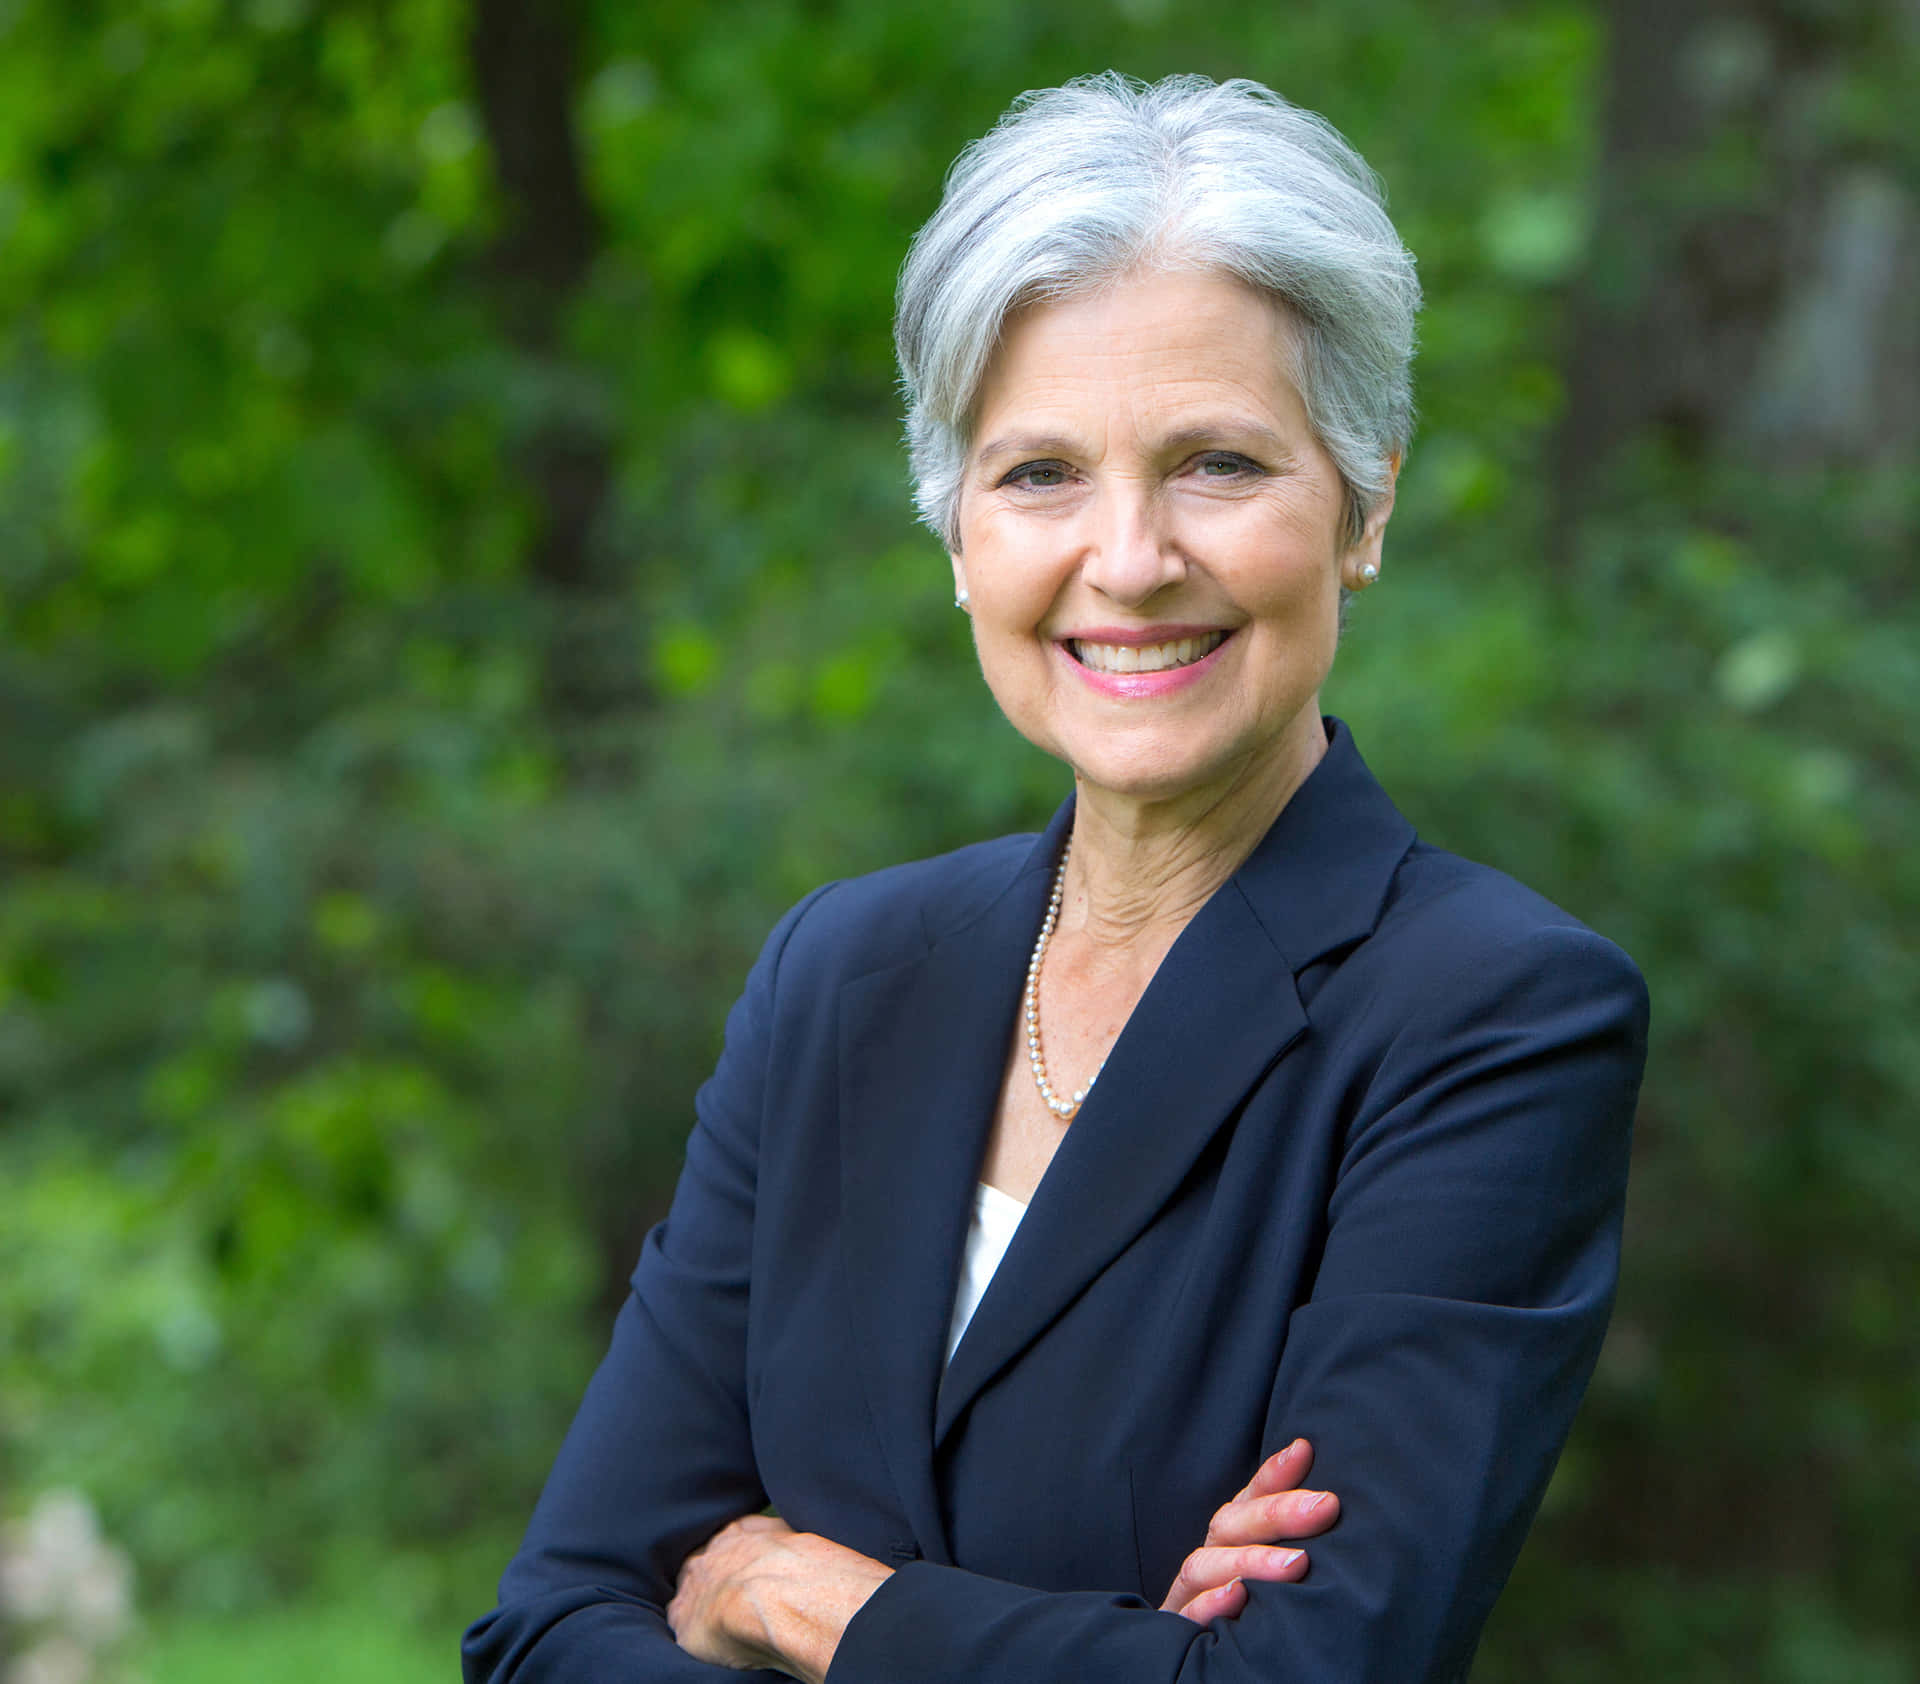 Jill Stein Arms Crossed Pose Wallpaper